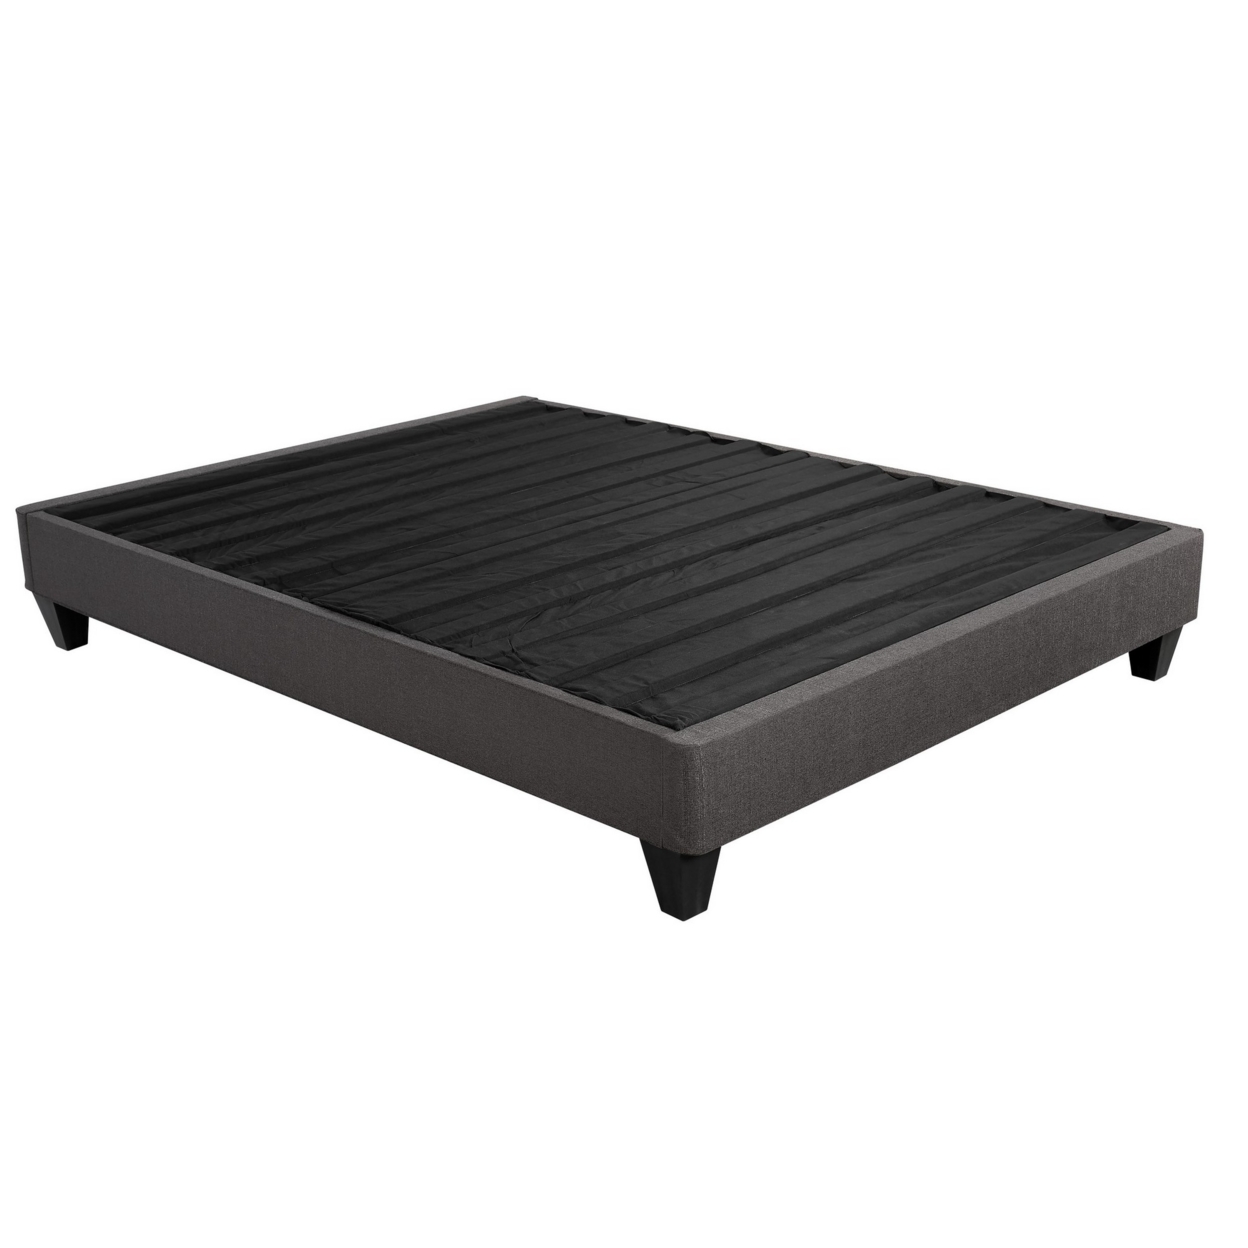 Tamy 13 Inch King Size Platform Bed Frame, Wood Base, Dark Gray Linen- Saltoro Sherpi